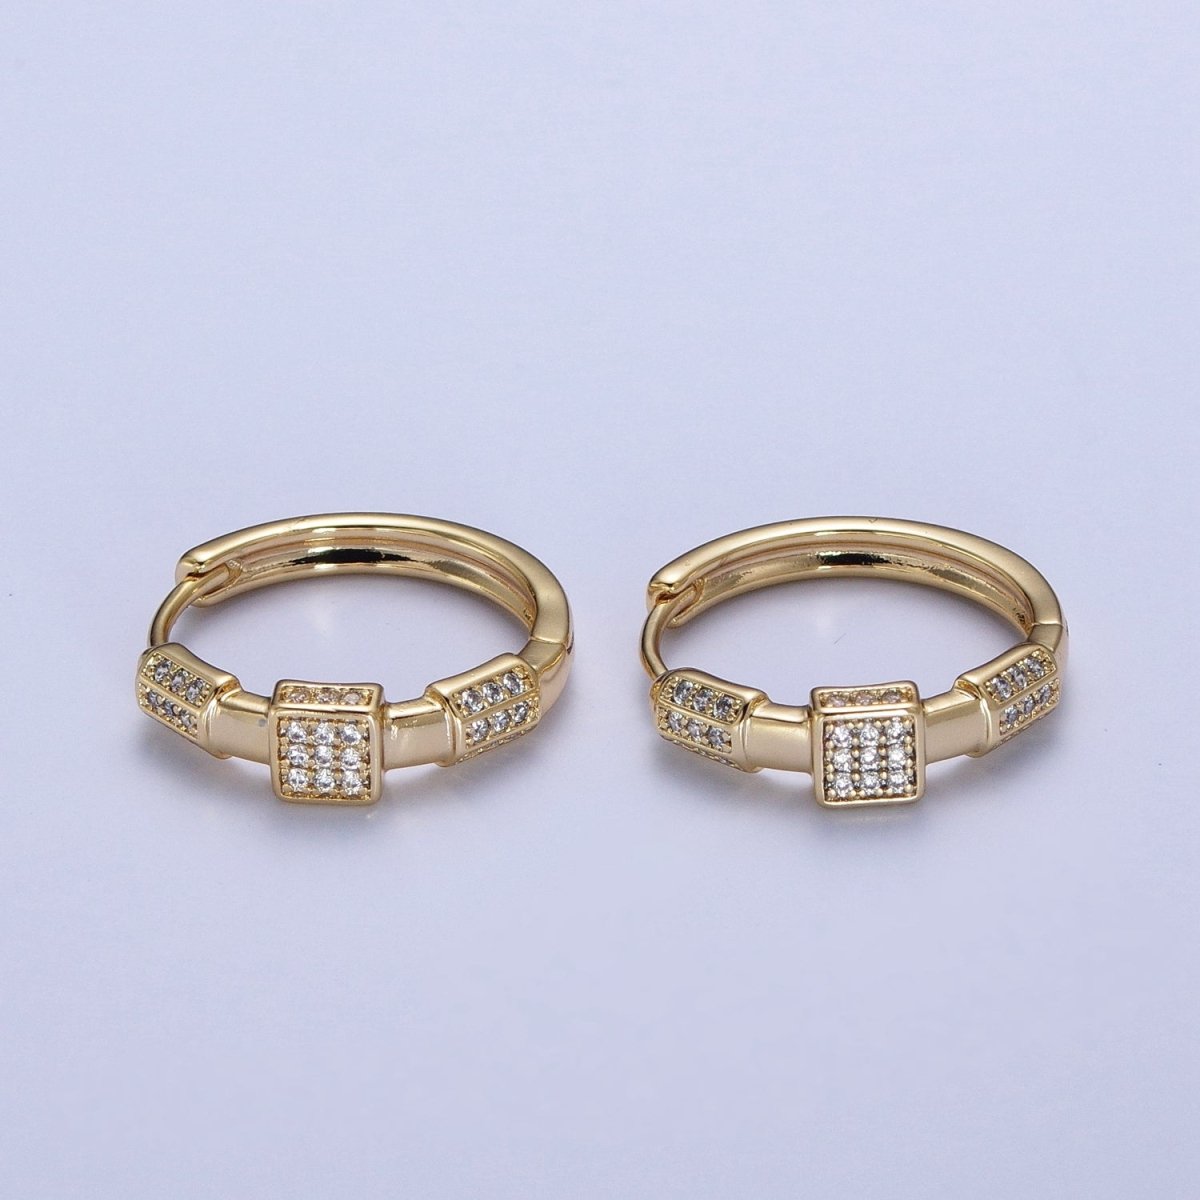 Gold Modern Hoop Earring Everyday Hoops Geometric Jewelry Medium Size Textured Hoops, Round Earrings P-253 - DLUXCA